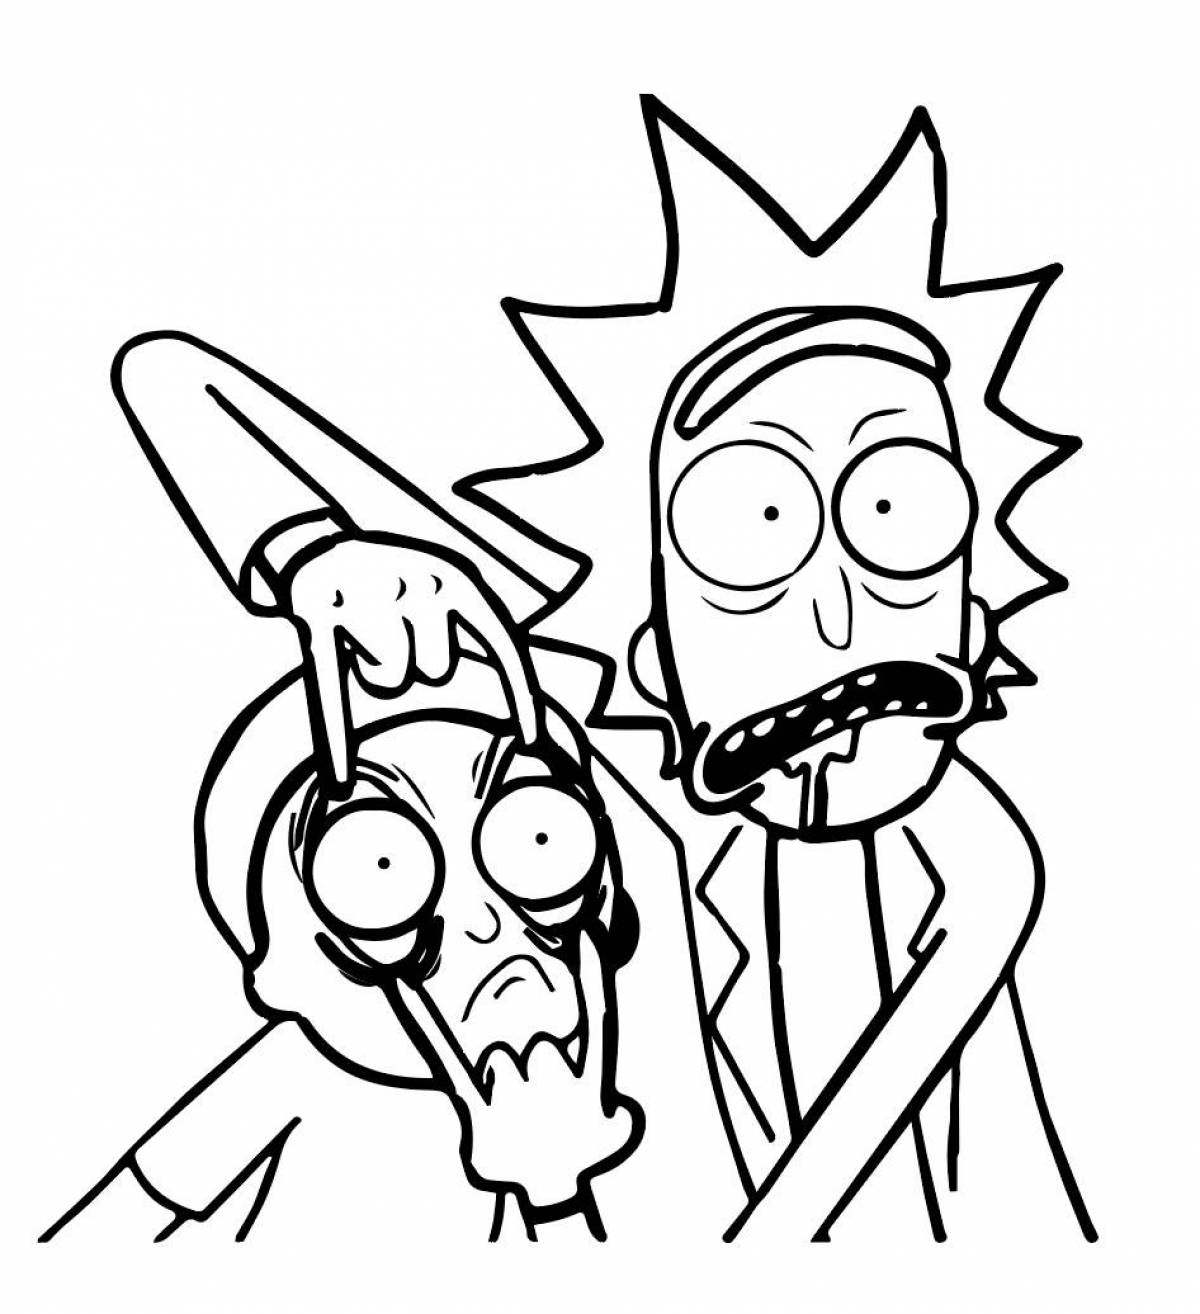 Rick and morty drawing